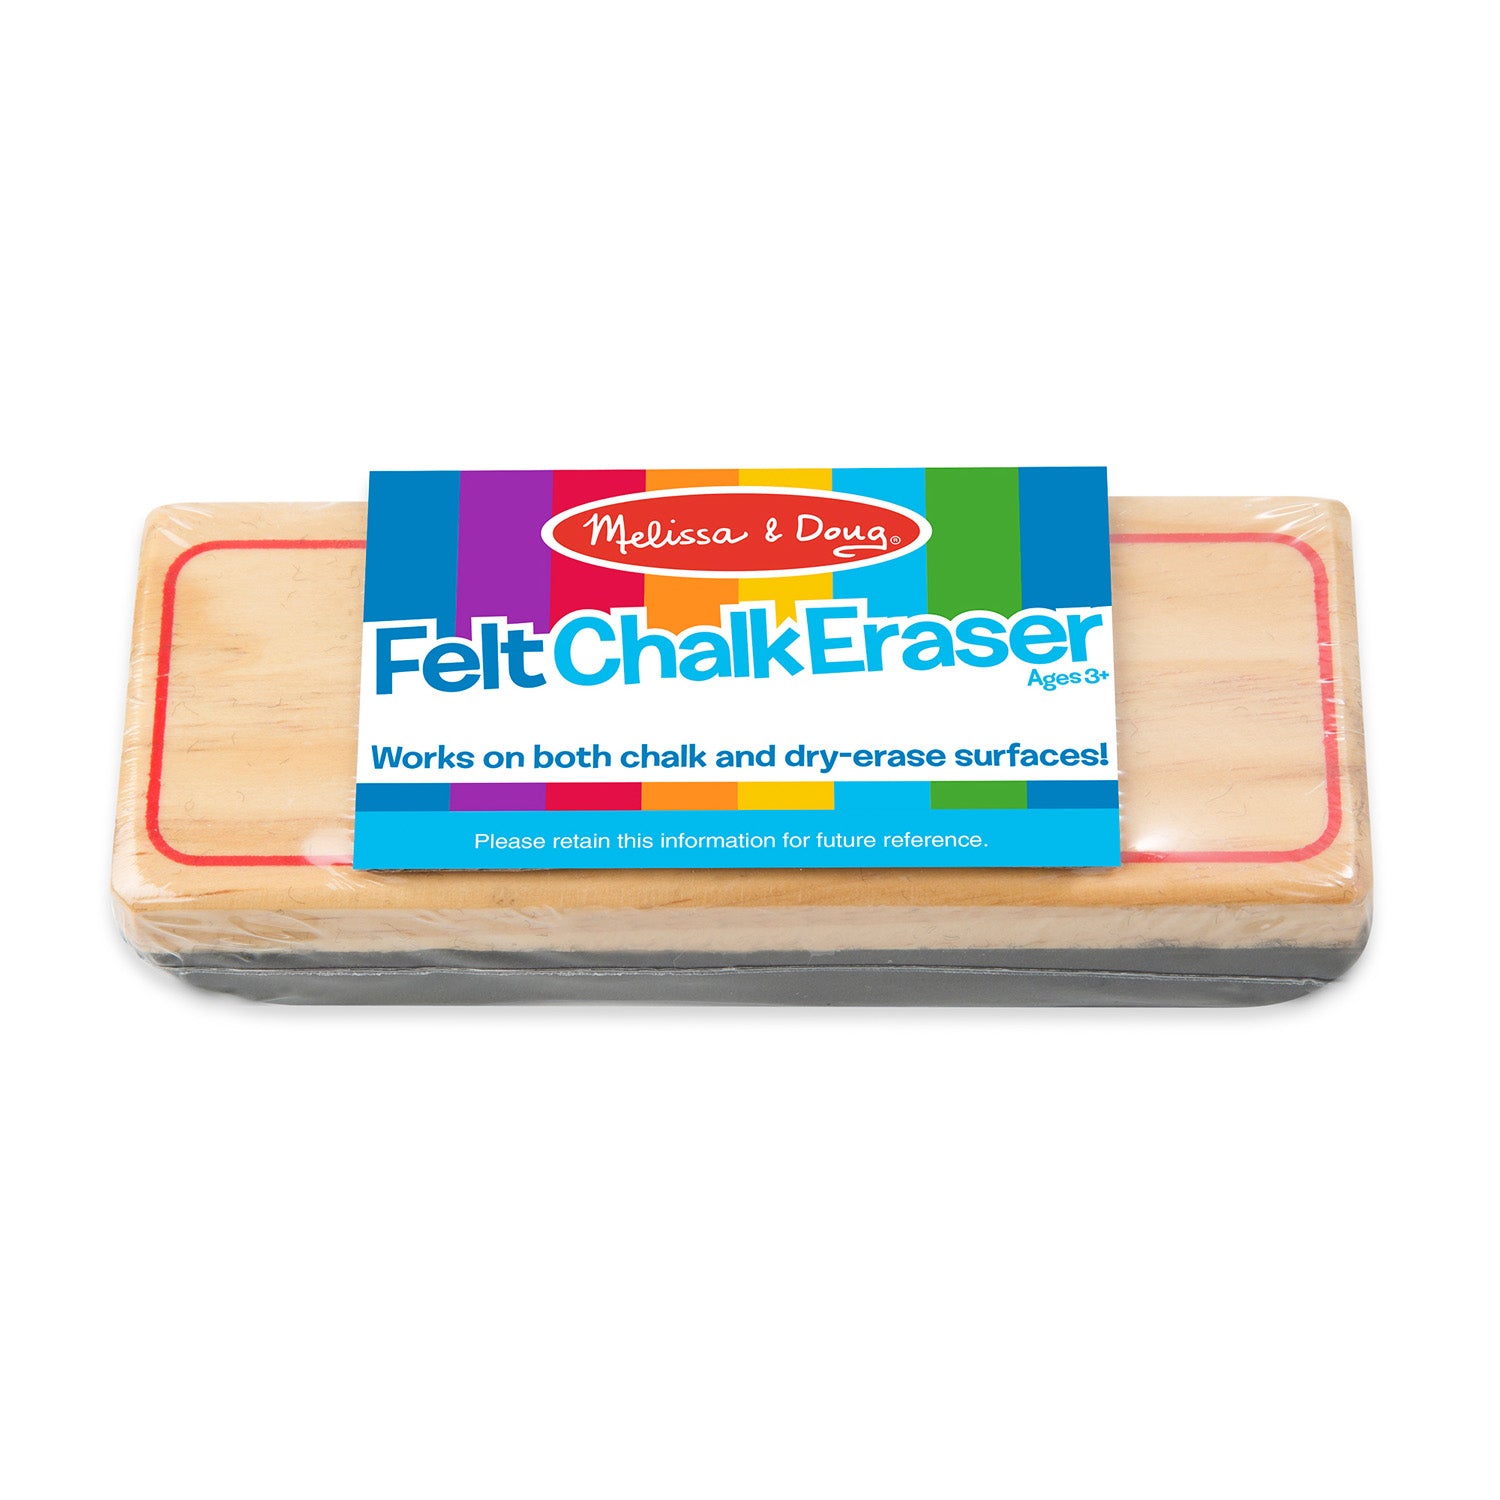 Felt Chalk Eraser 4101